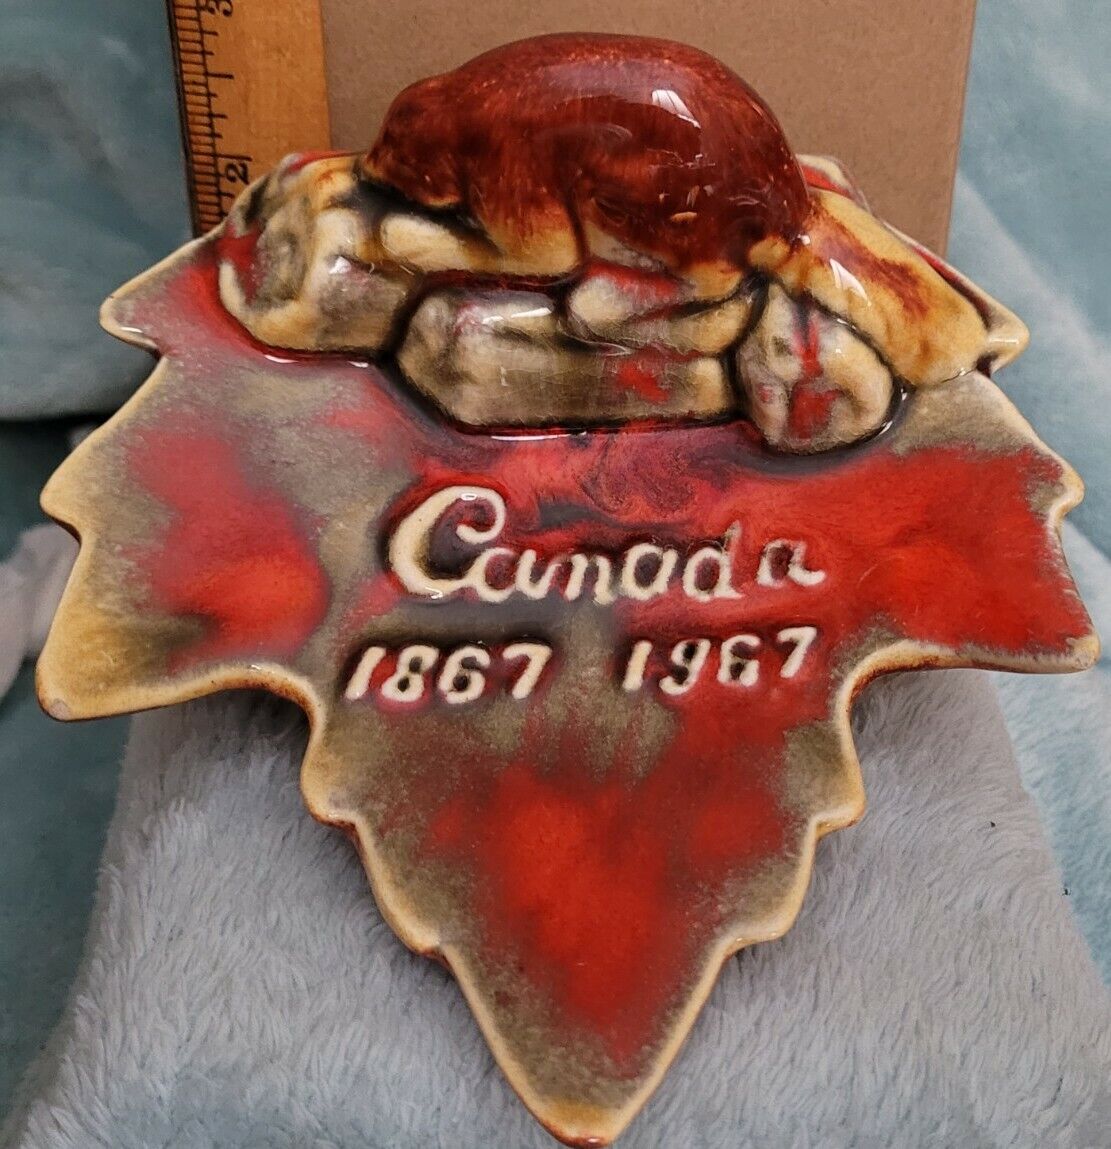 VINTAGE CERAMIC CANADA CENTENNIAL 1867 1967 LEAF SHAPED ASHTRAY